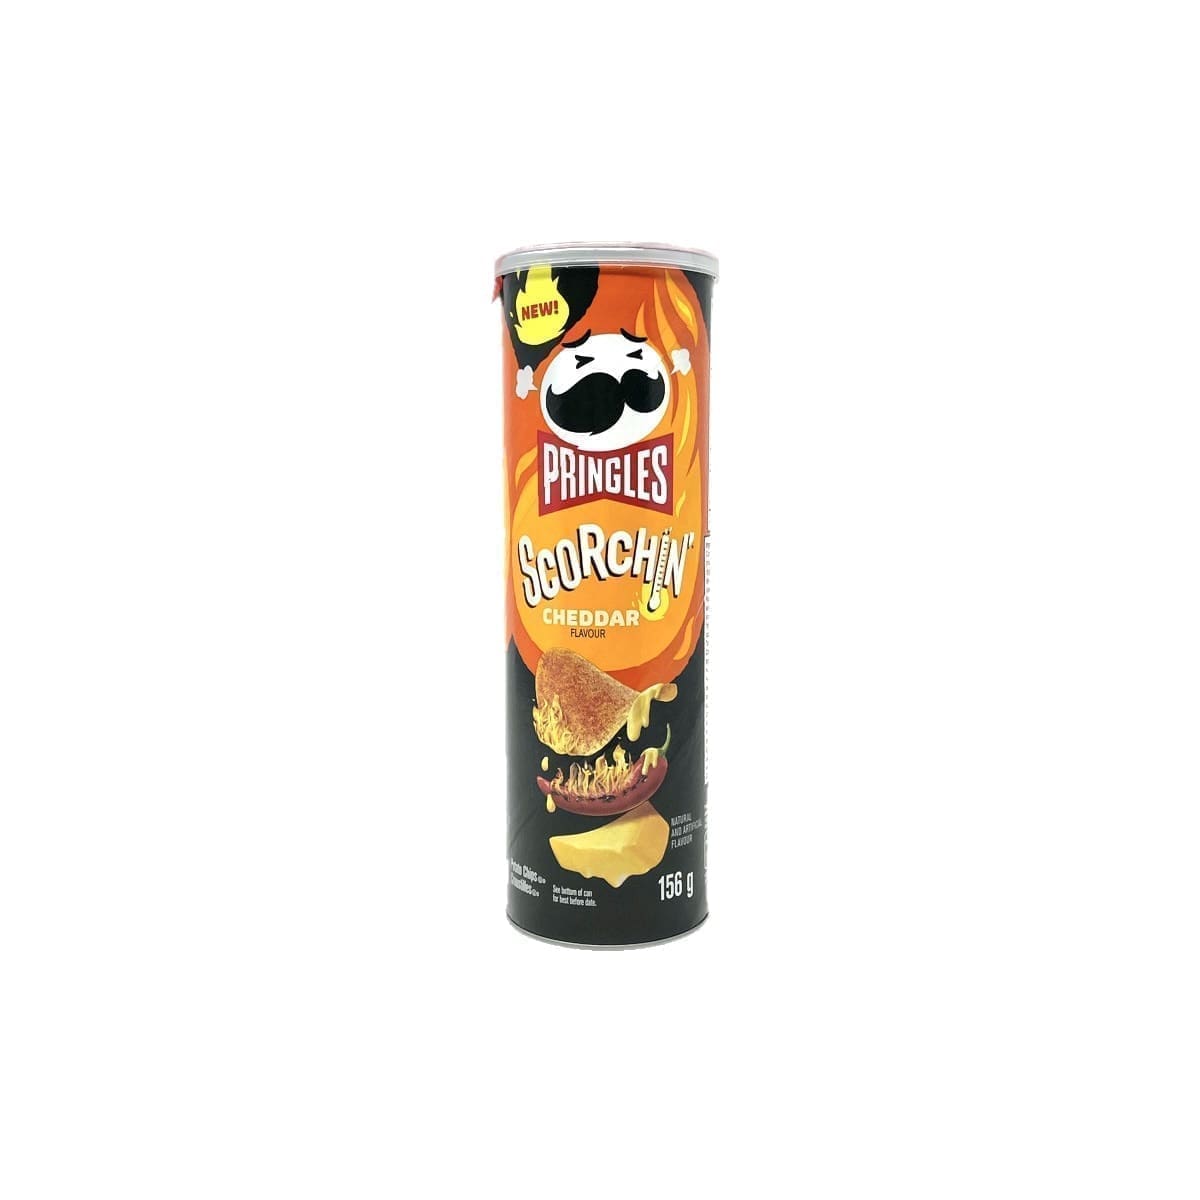 Pringles Scorchin’ Cheddar (156g)